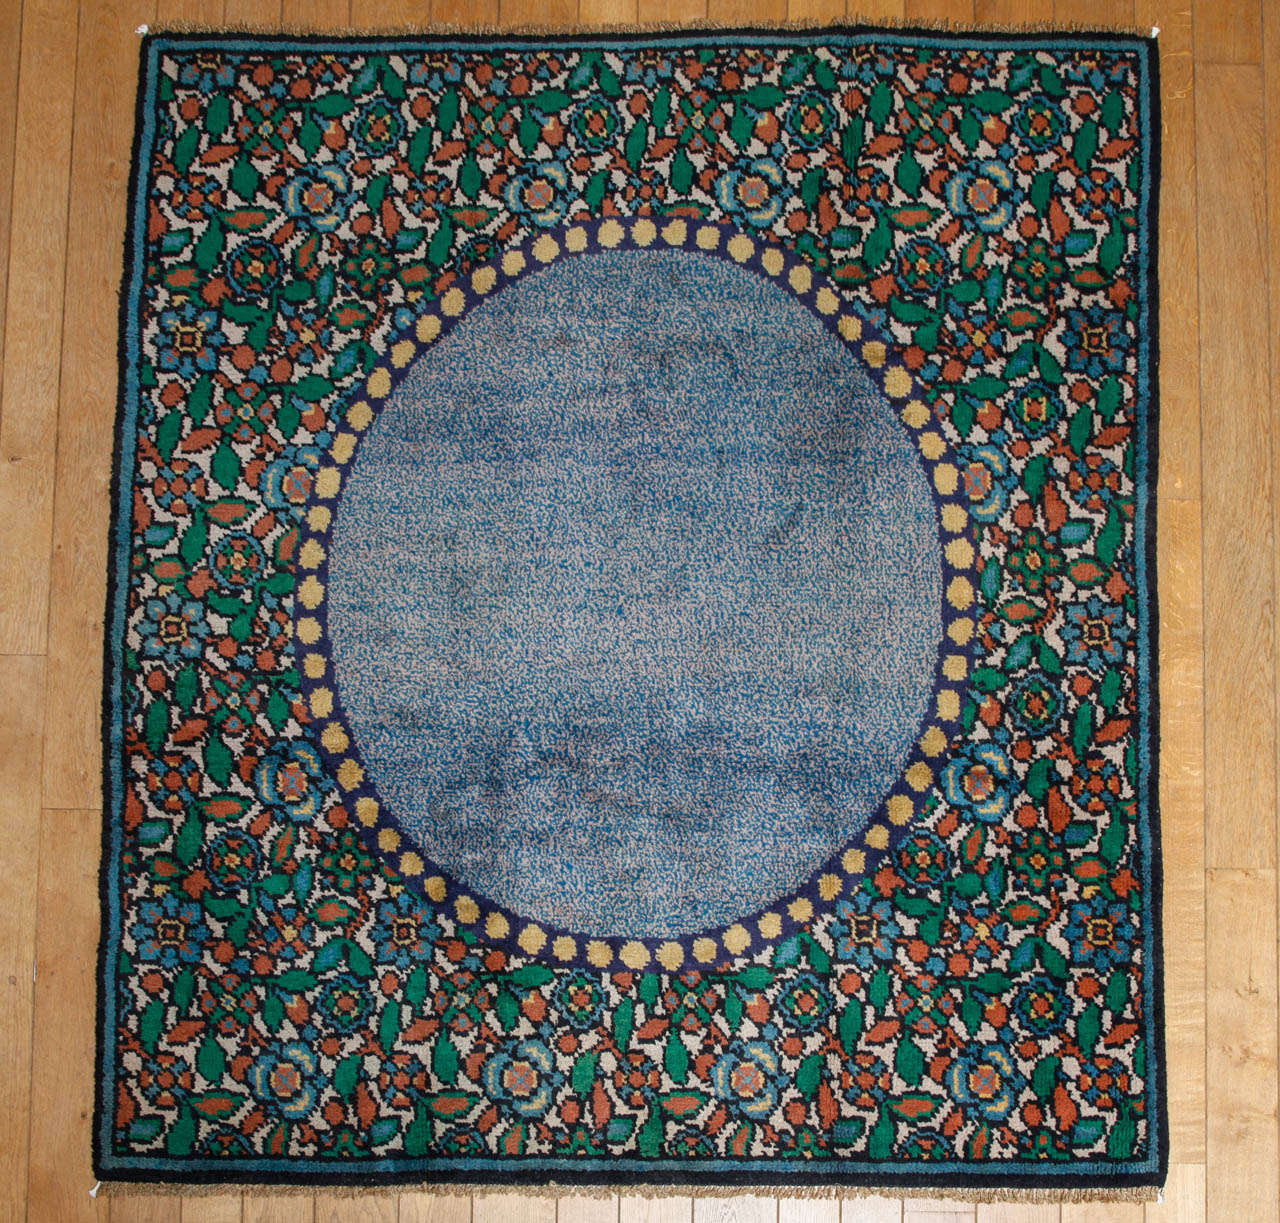 A rectangular Art Deco rug by Kunstwerkstede De Coene, workshop located in Kortrijk (Courtrai), Belgium. Floral border with a central blue medallion.